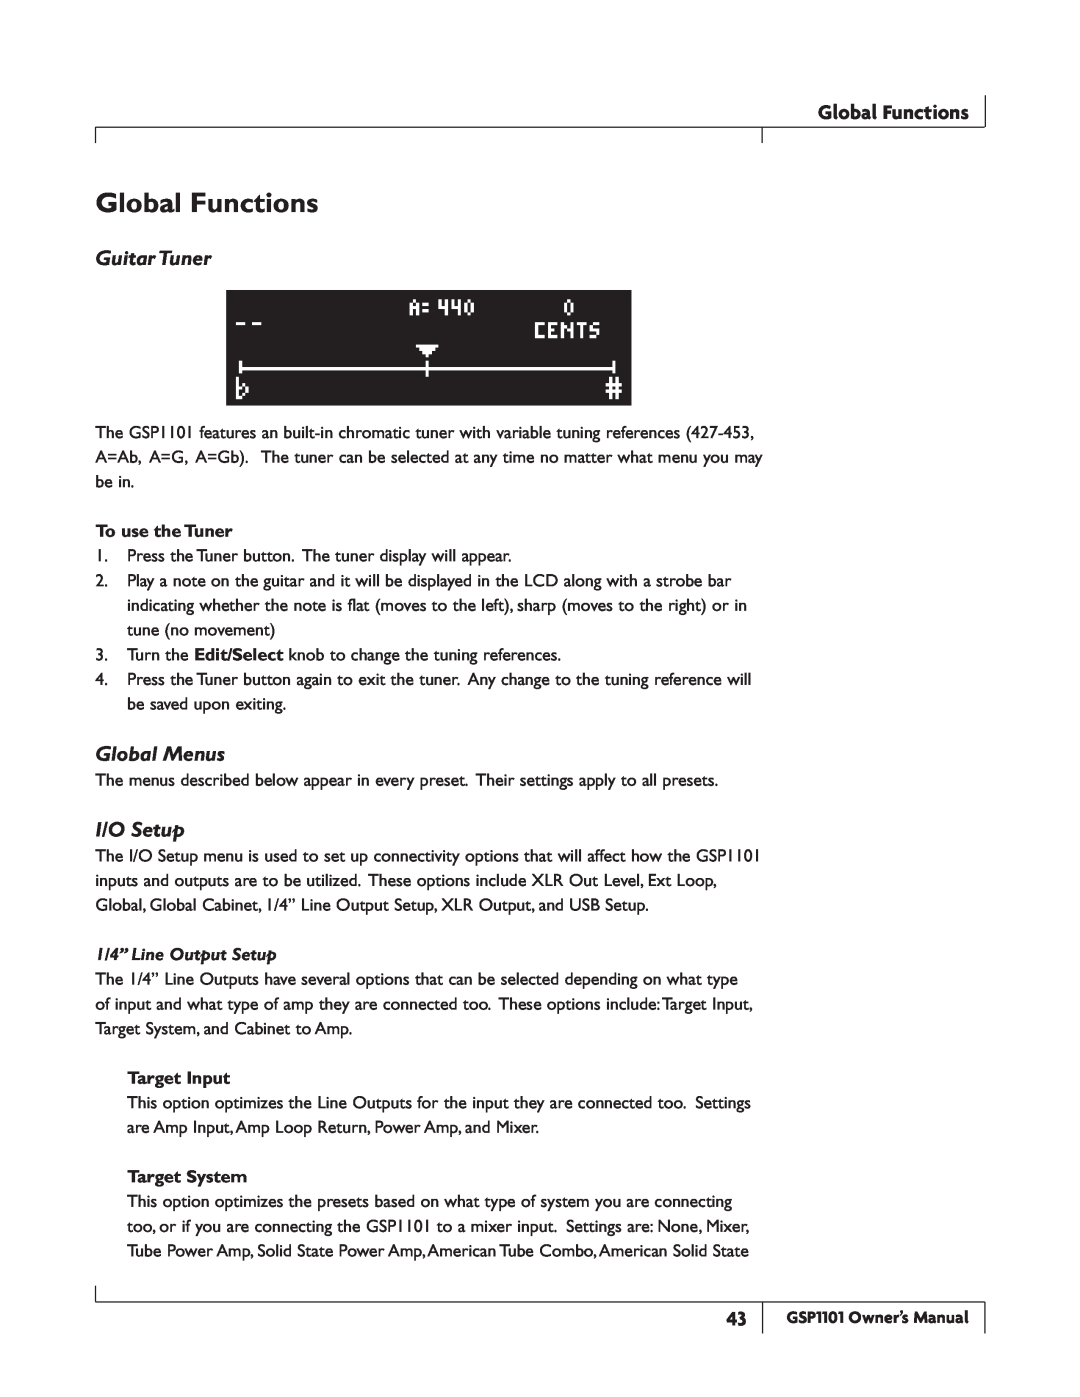 DigiTech GSP1101 Global Functions, Guitar Tuner, Global Menus, I/O Setup, To use the Tuner, 1/4” Line Output Setup 